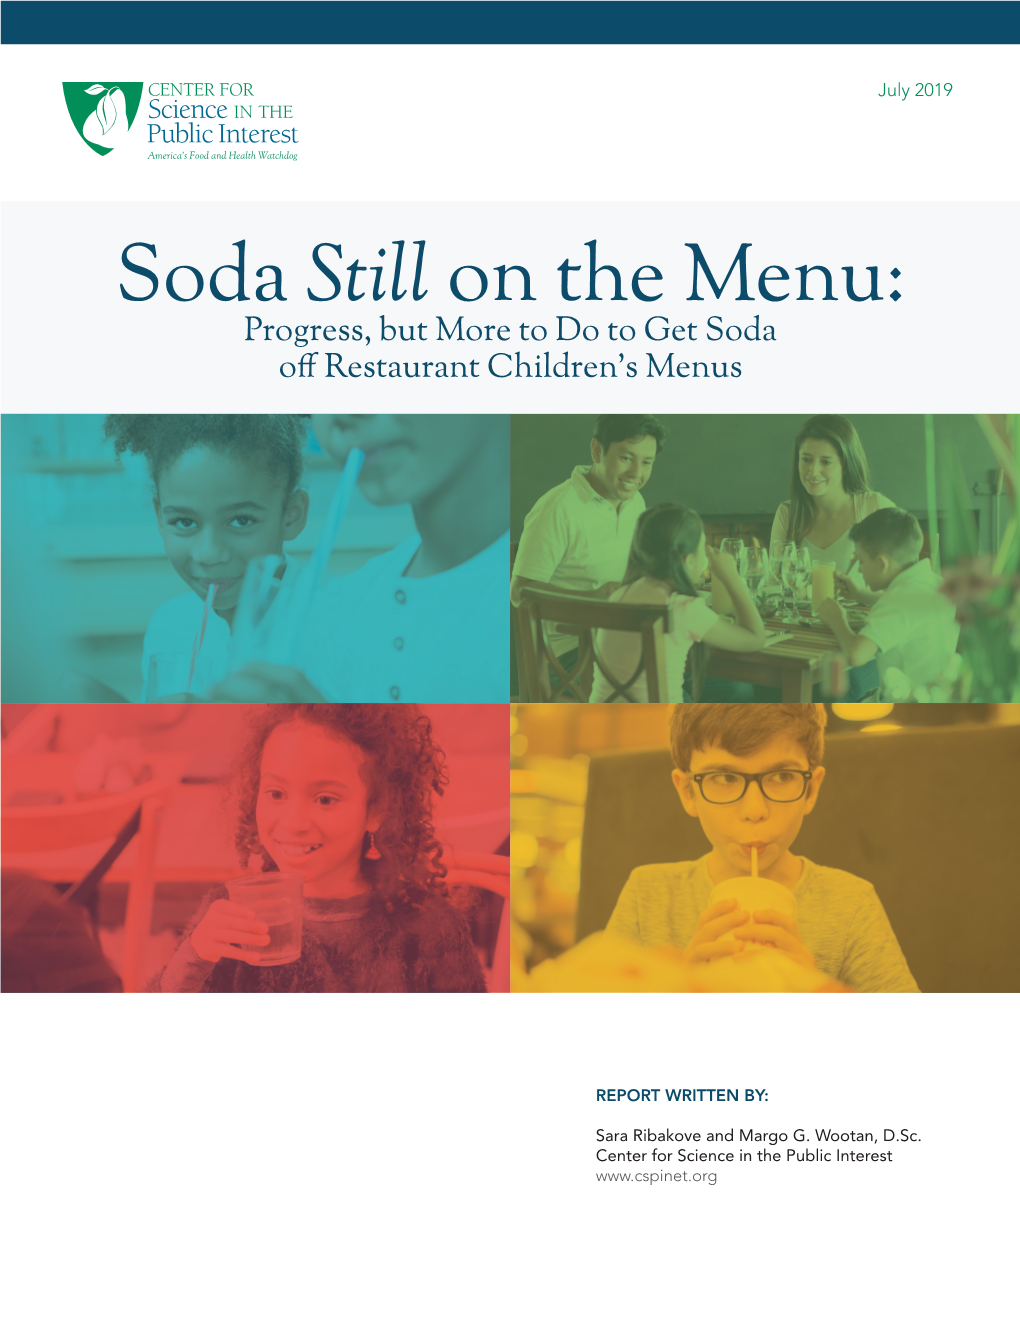 Soda Still on the Menu: Progress, but More to Do to Get Soda Off Restaurant Children’S Menus